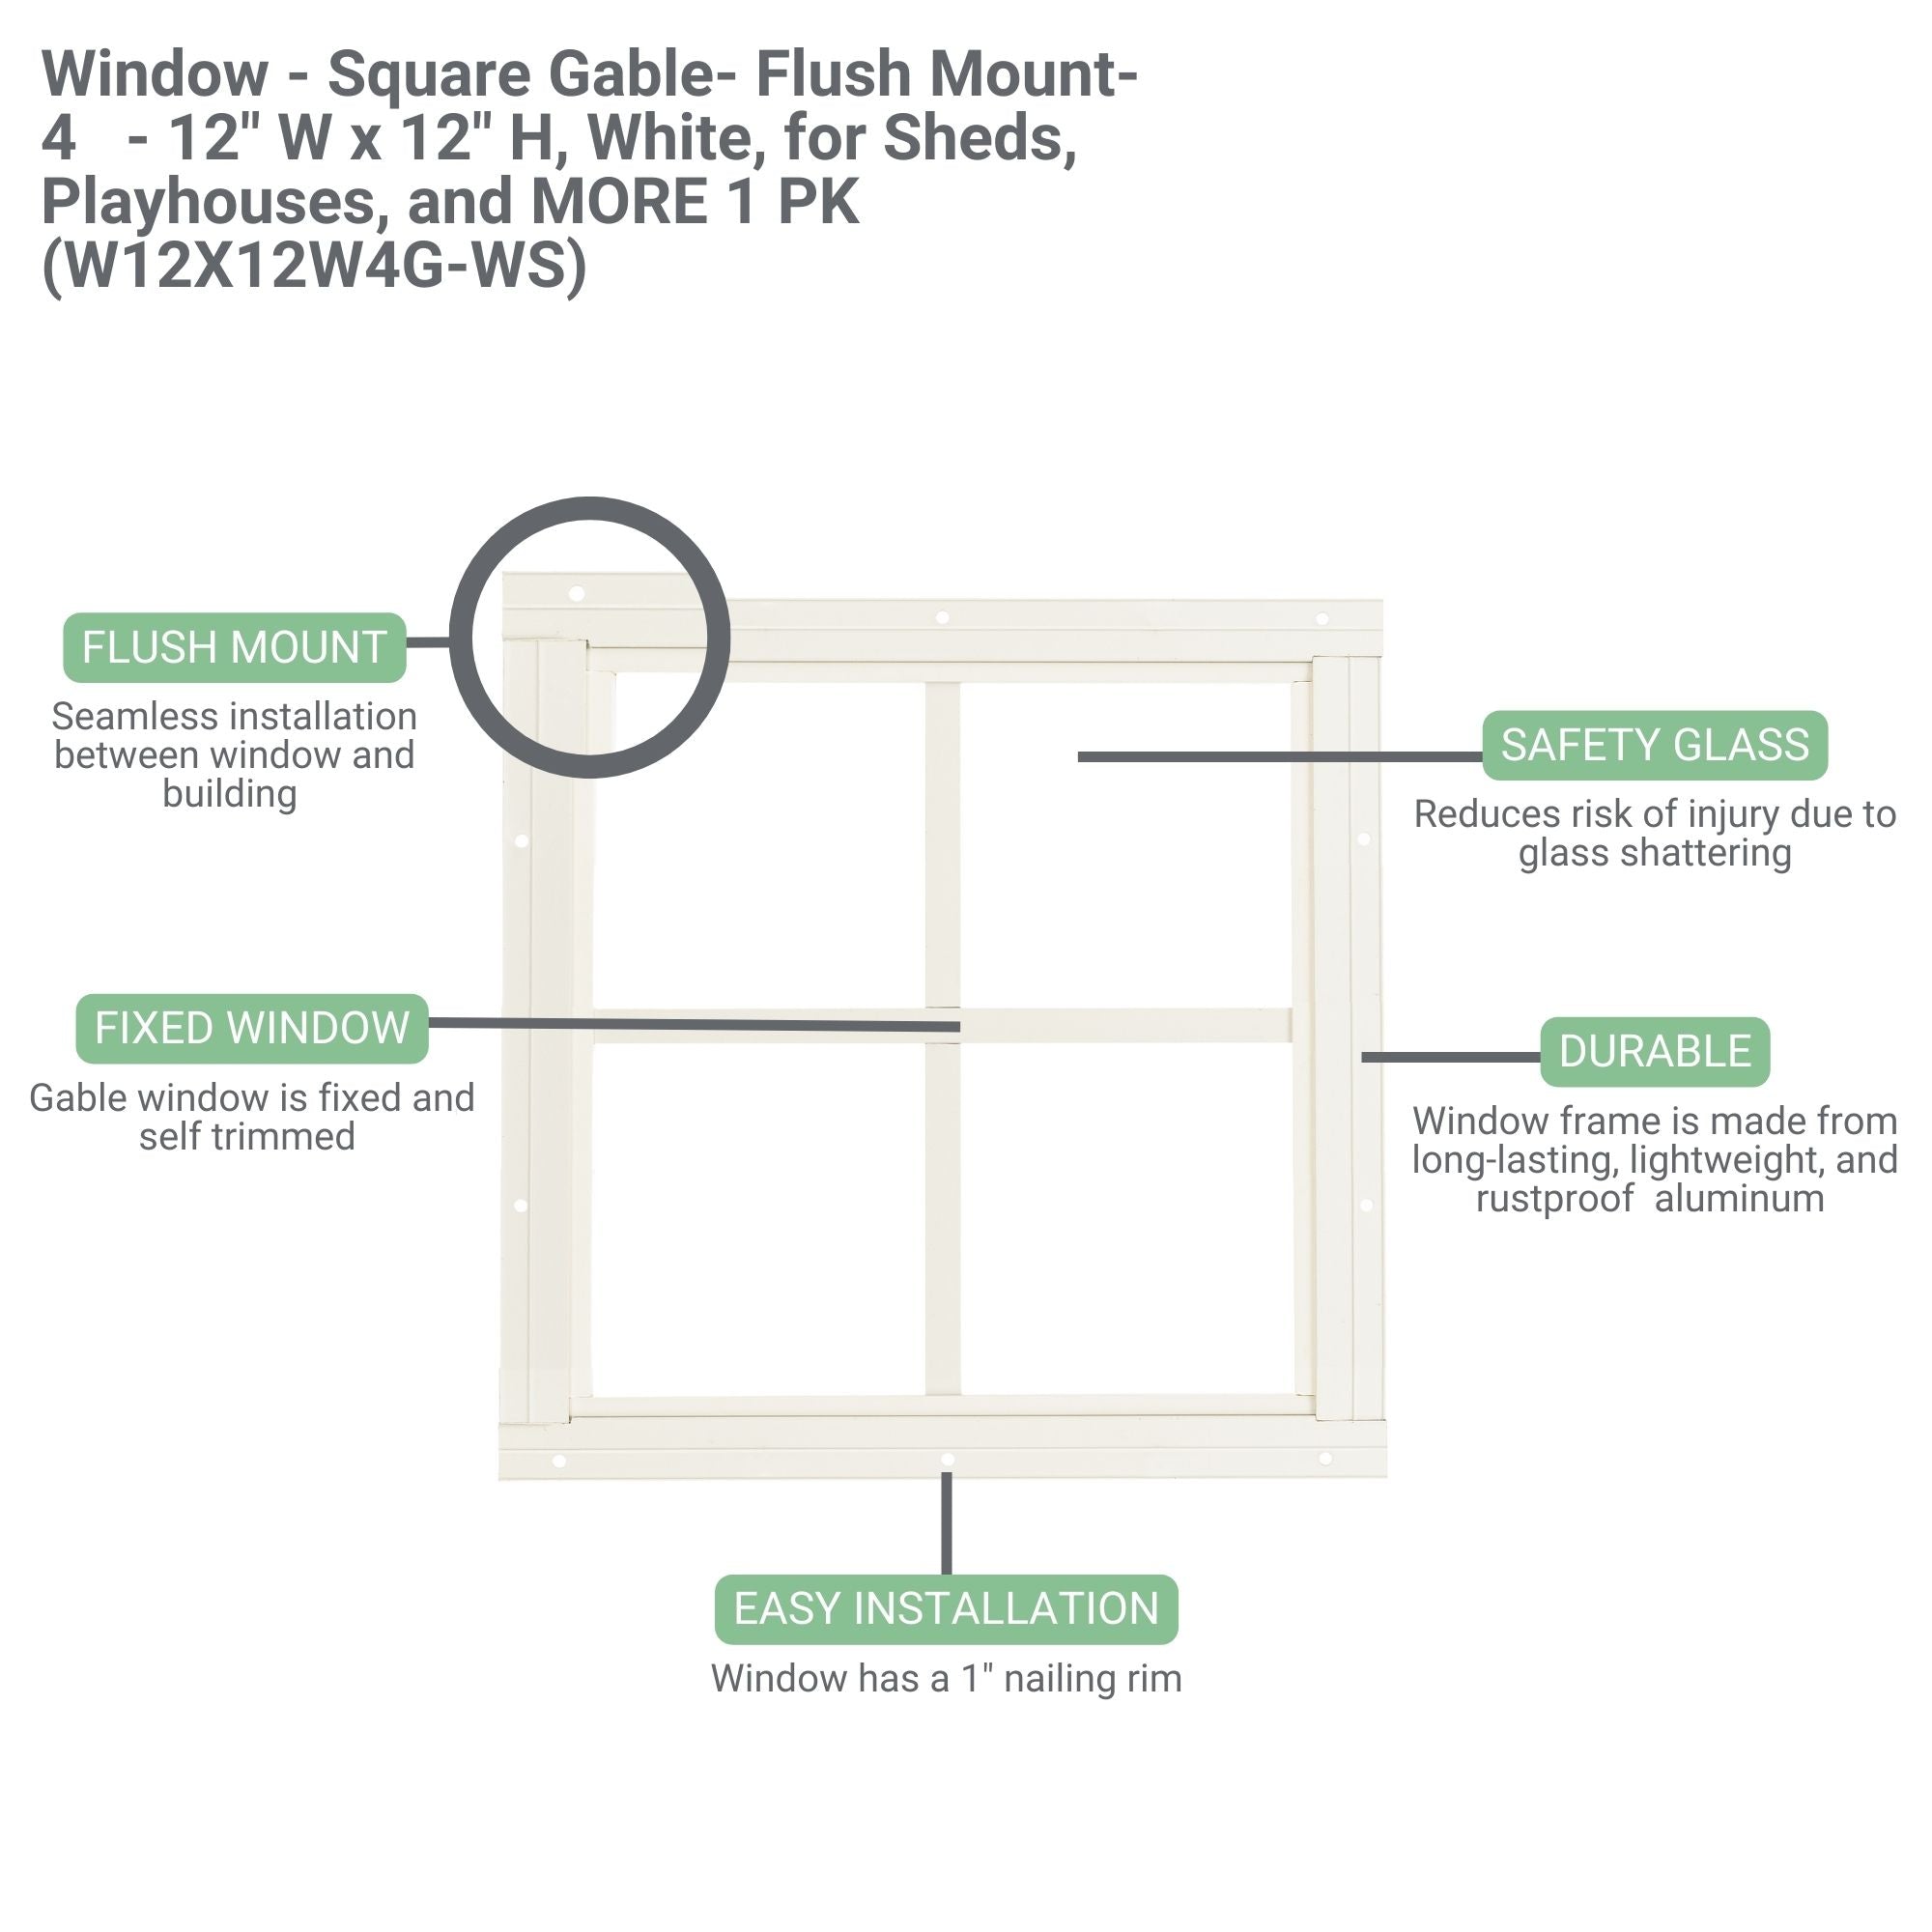 12" W x 12" H Square Gable Flush Mount Shed Window 1 PK